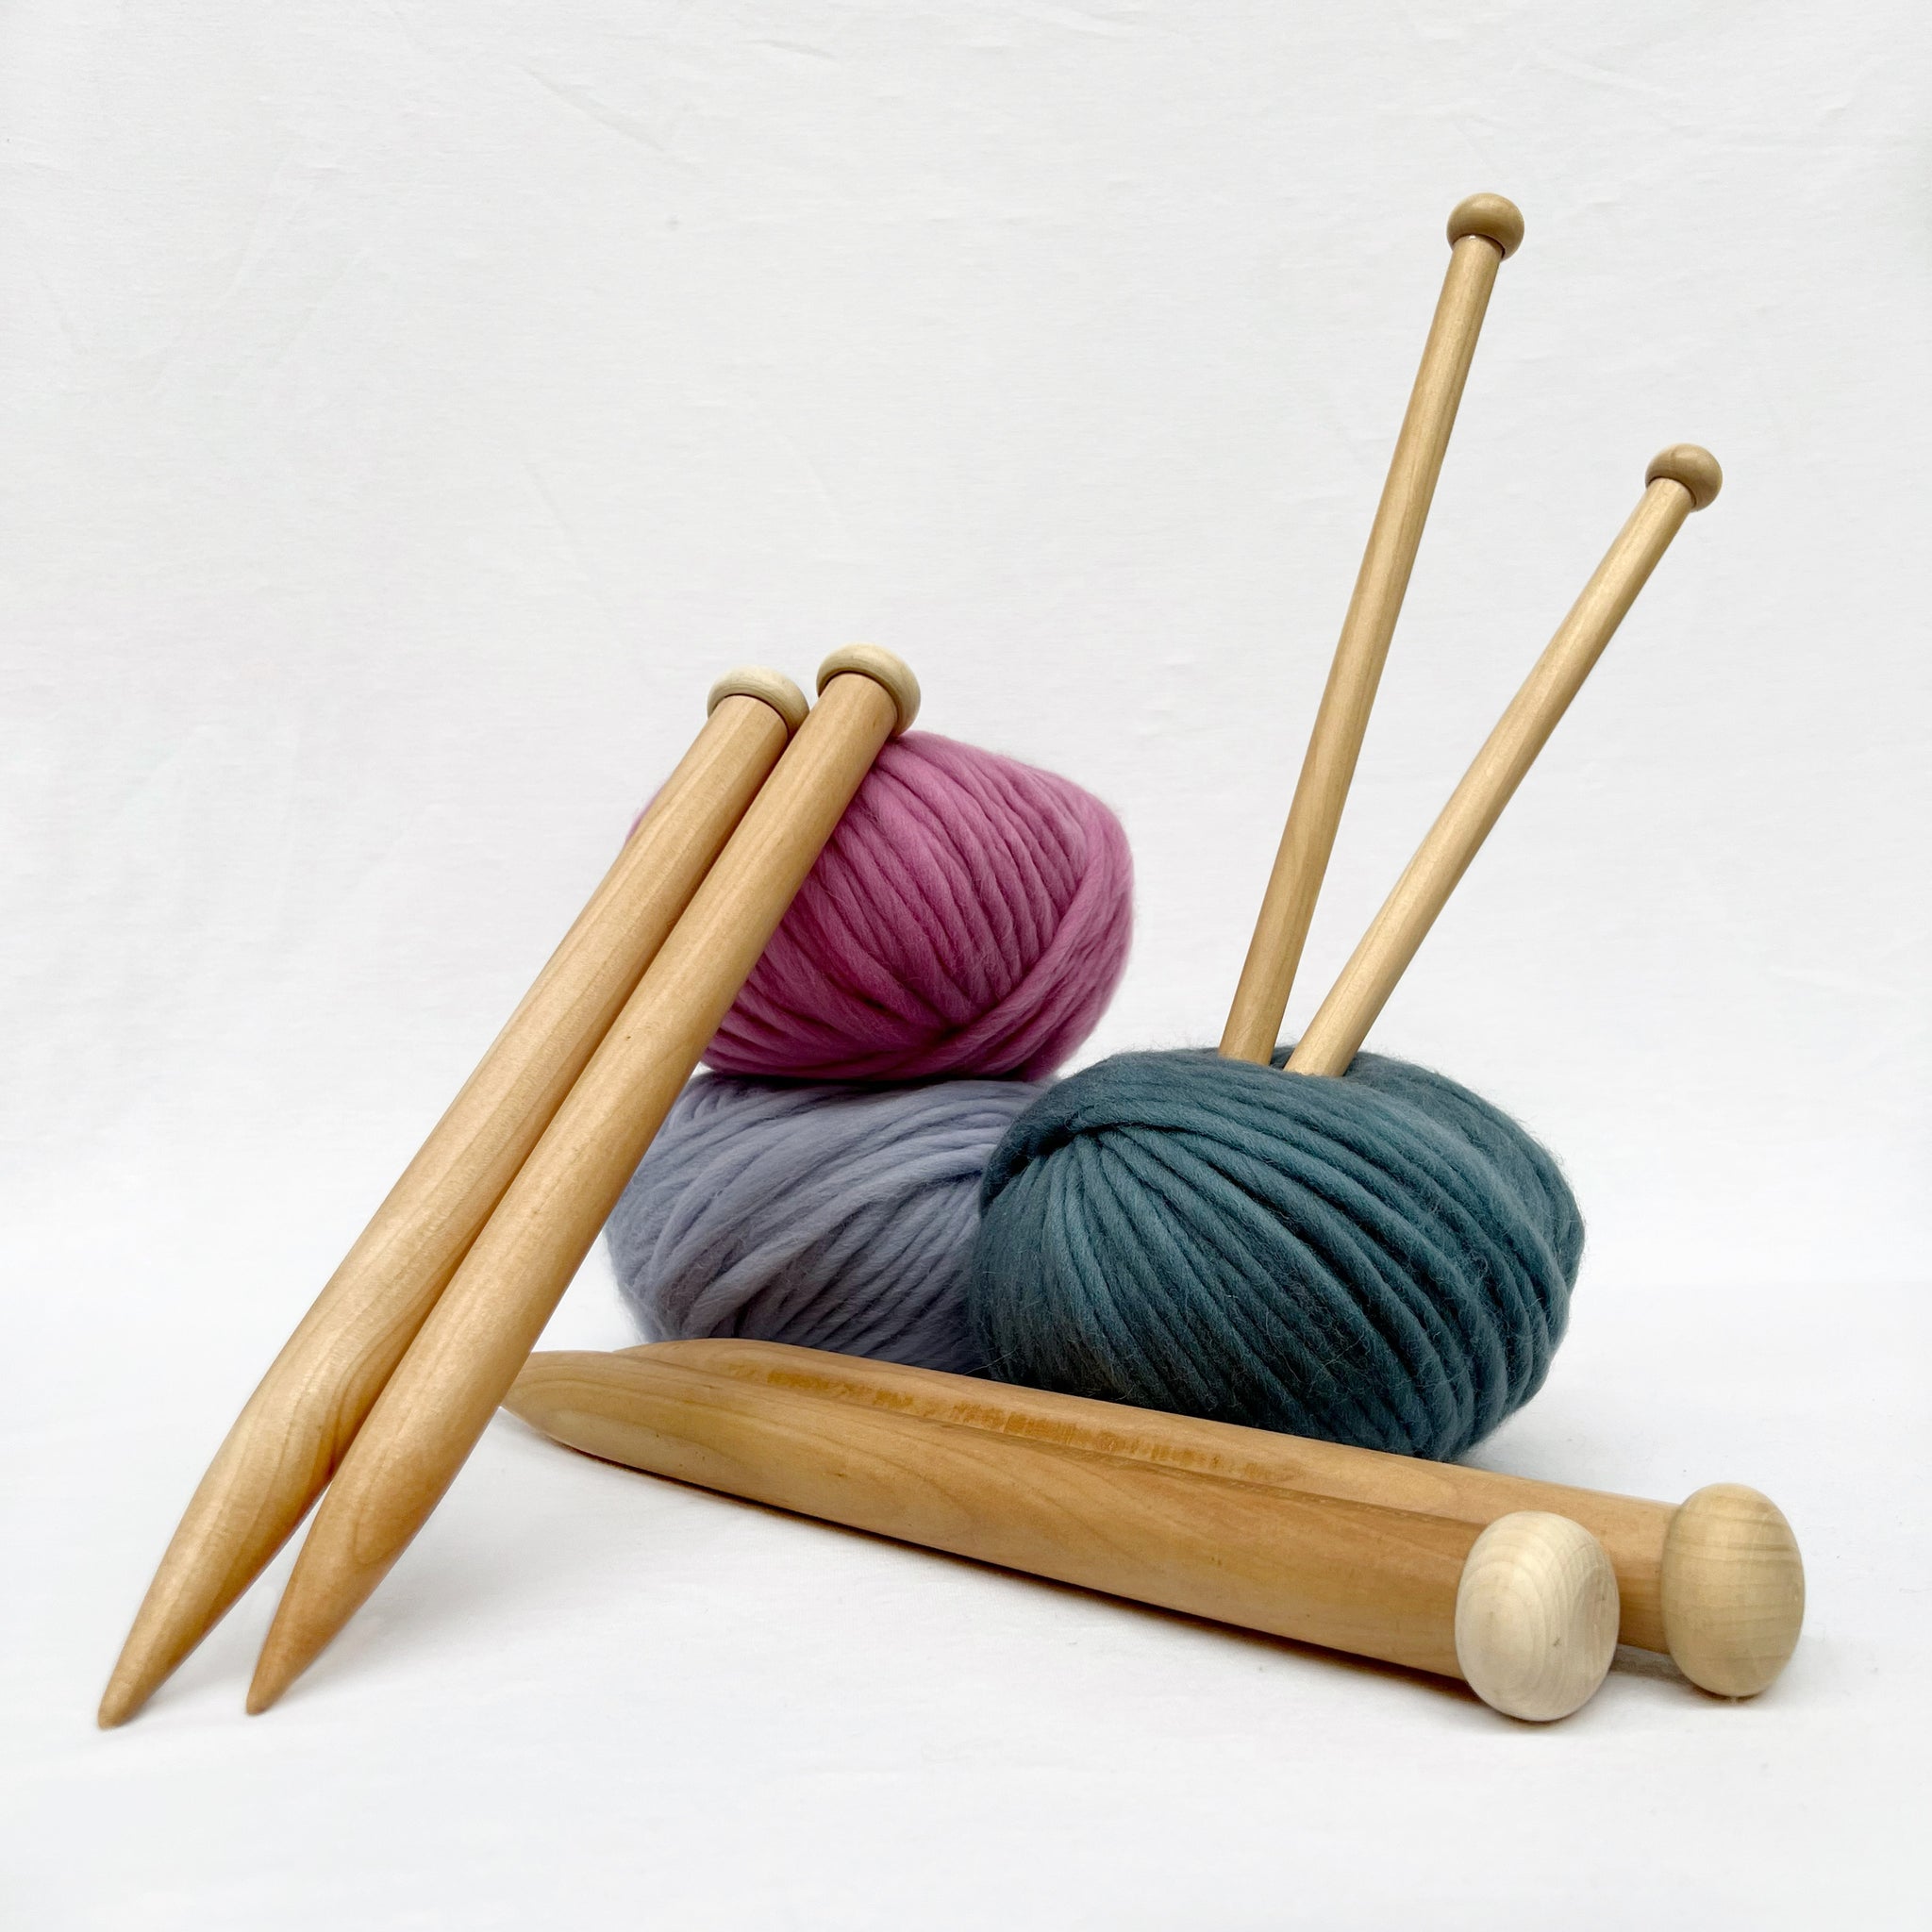 Knitting Needles - Mary Maker Studio - Macrame & Weaving Supplies and  Education.